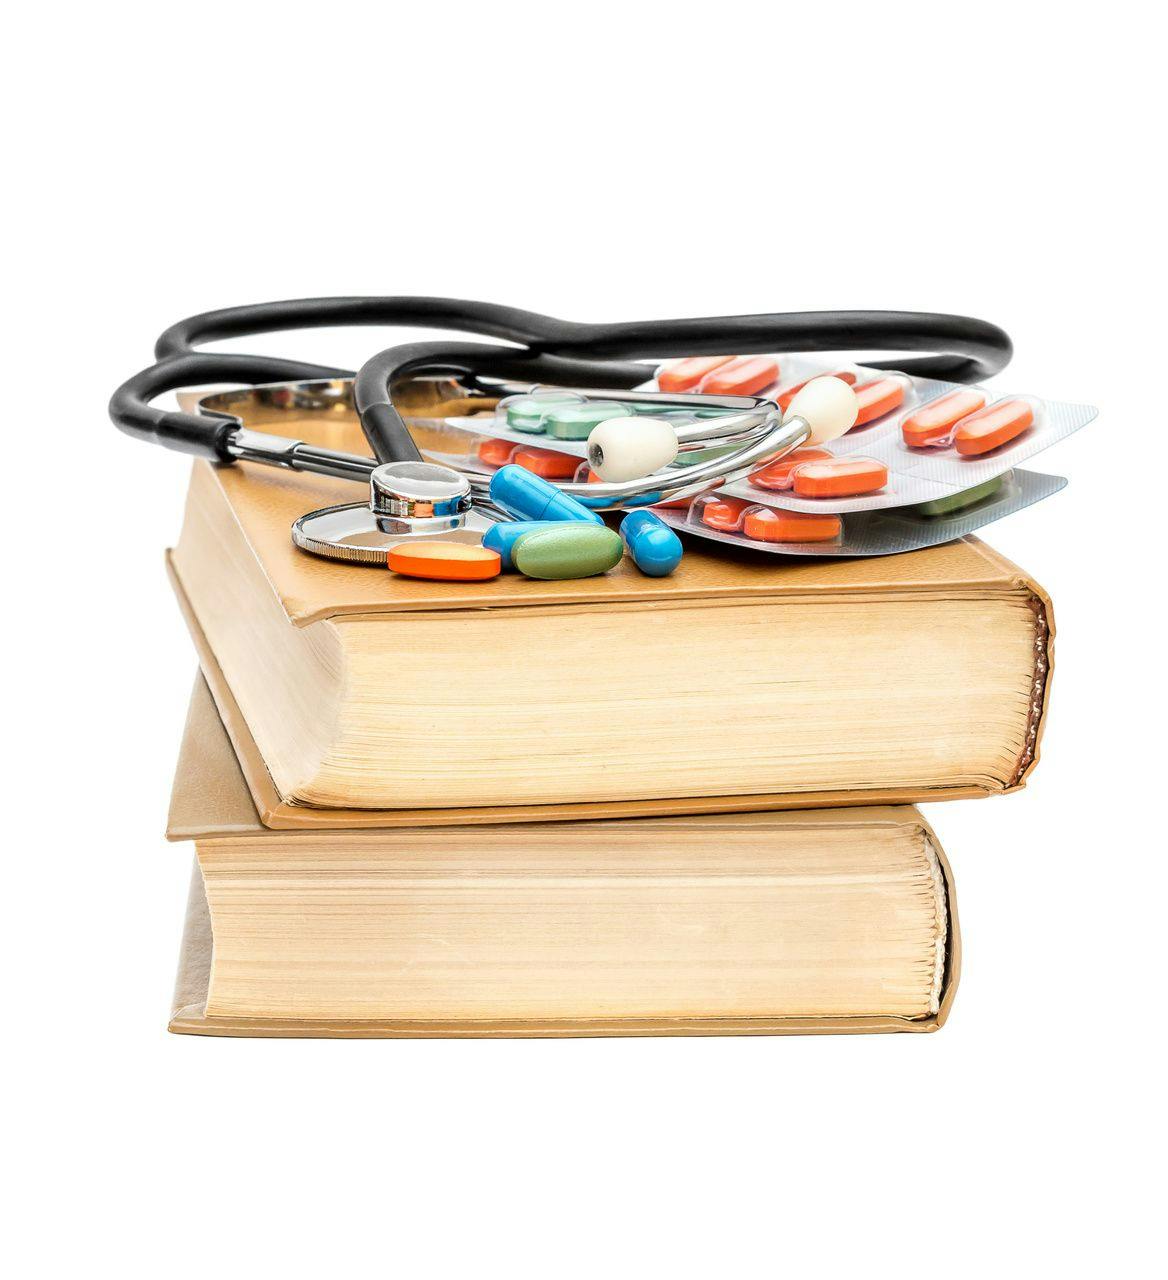 Book, stethoscope, medication